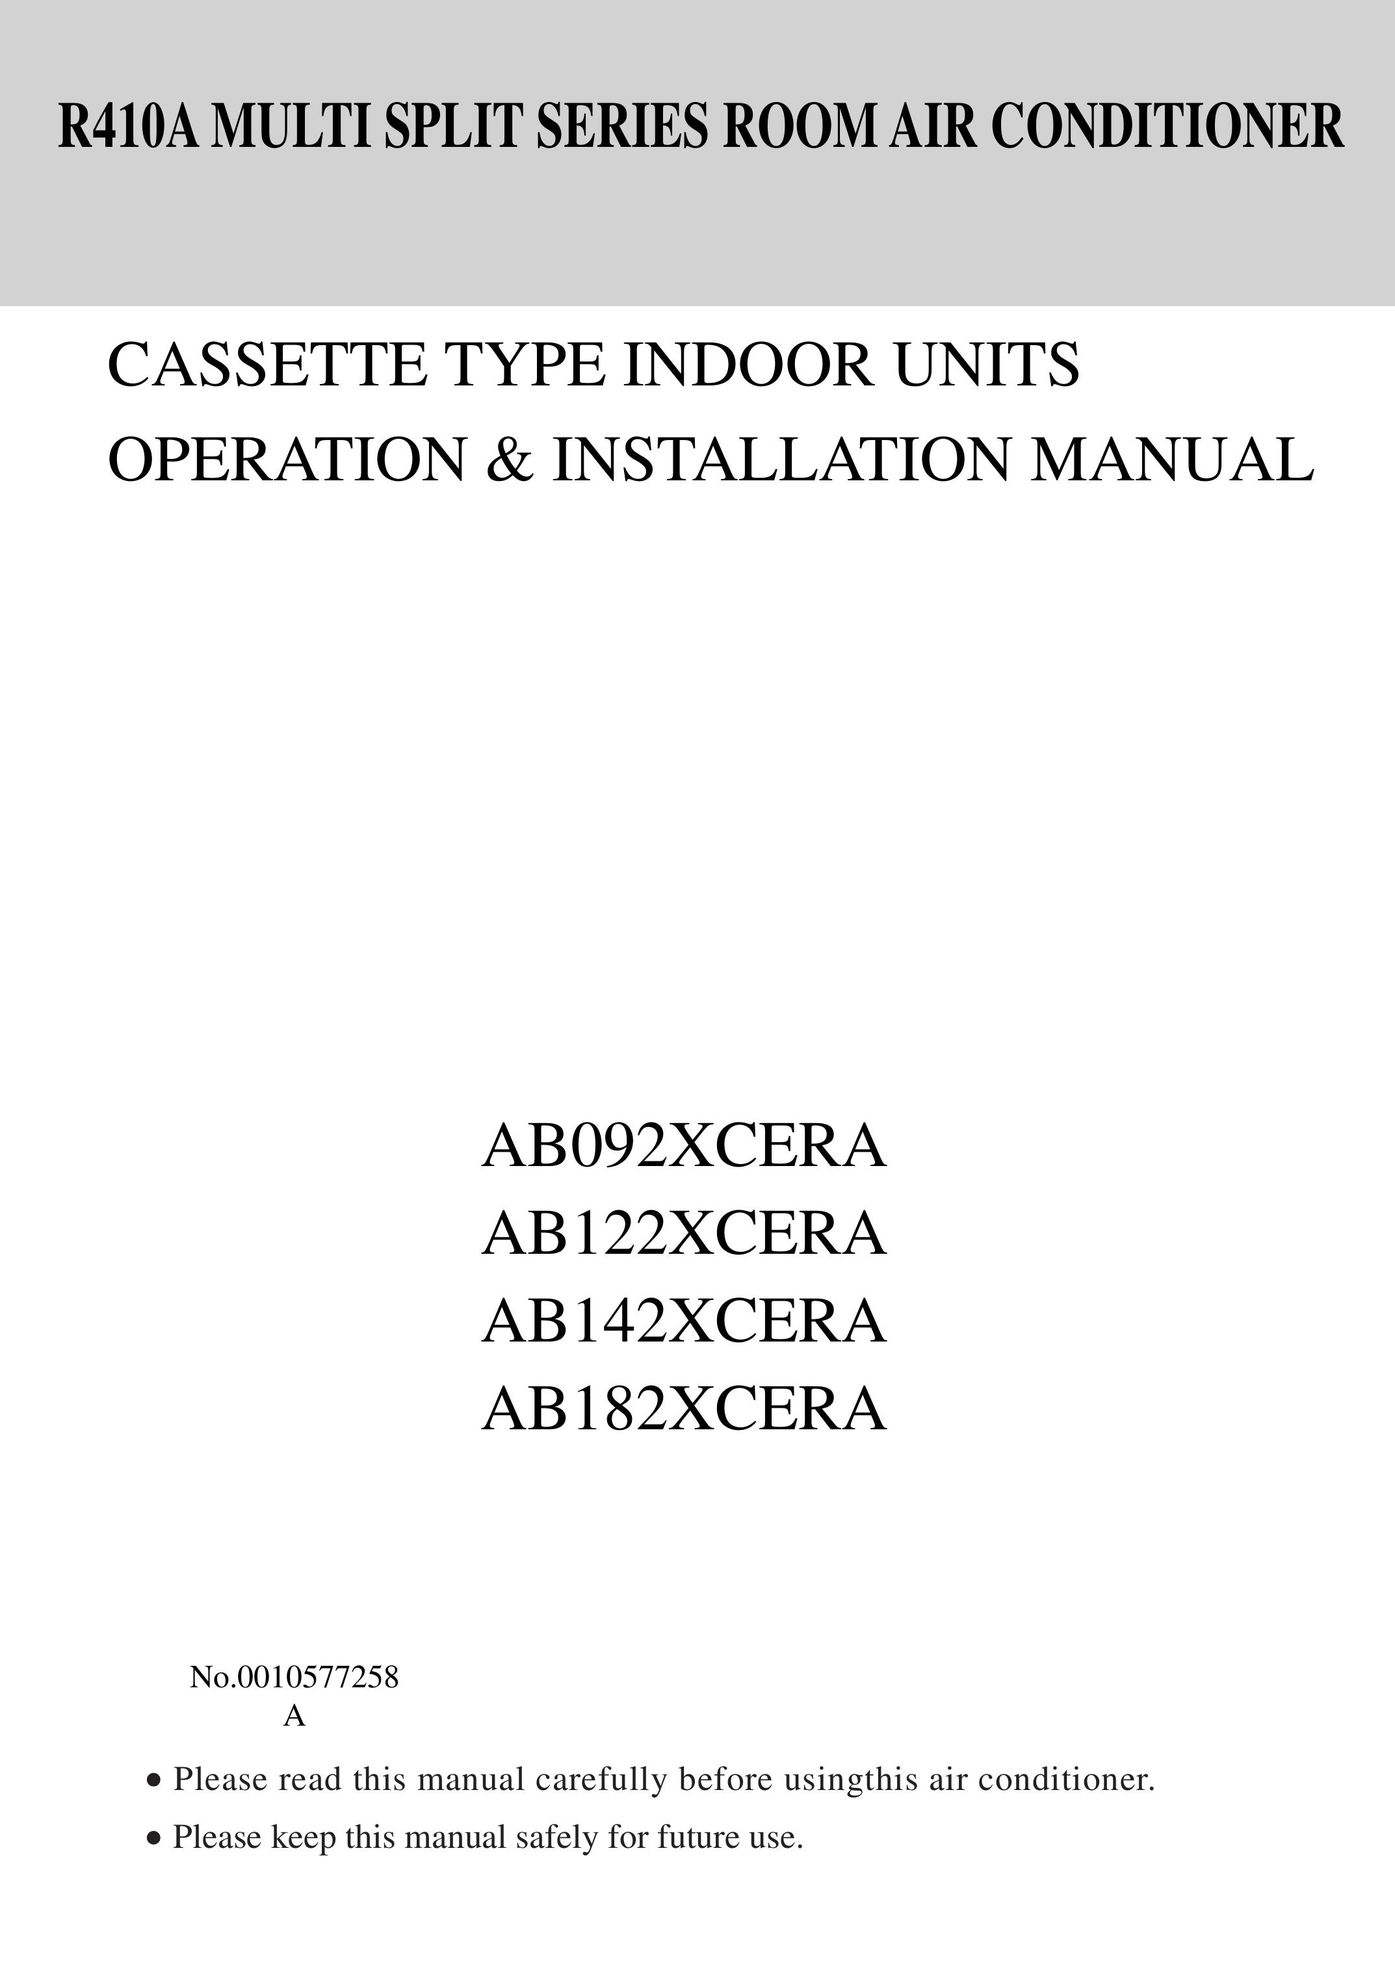 Haier AB182XCERA Air Conditioner User Manual